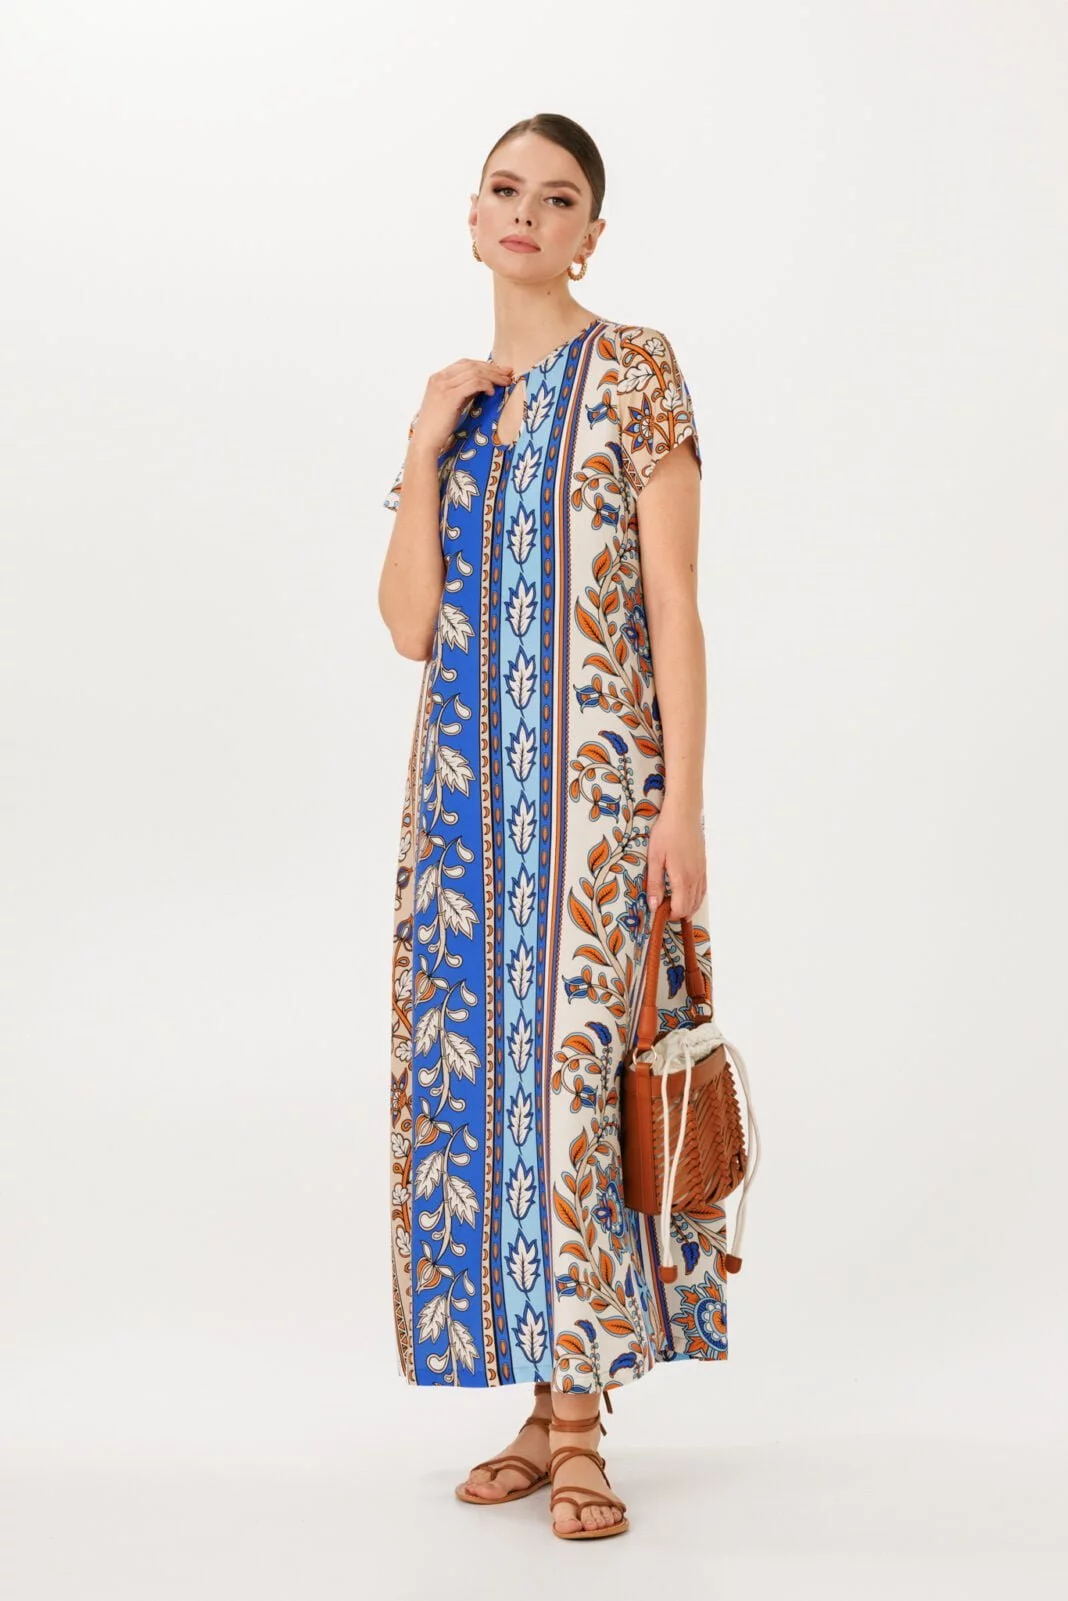 Summer Maxi Length Short Sleeve Kaftan Dress - Beige and Blue Mediterranean Beauty for Vacation and Evening